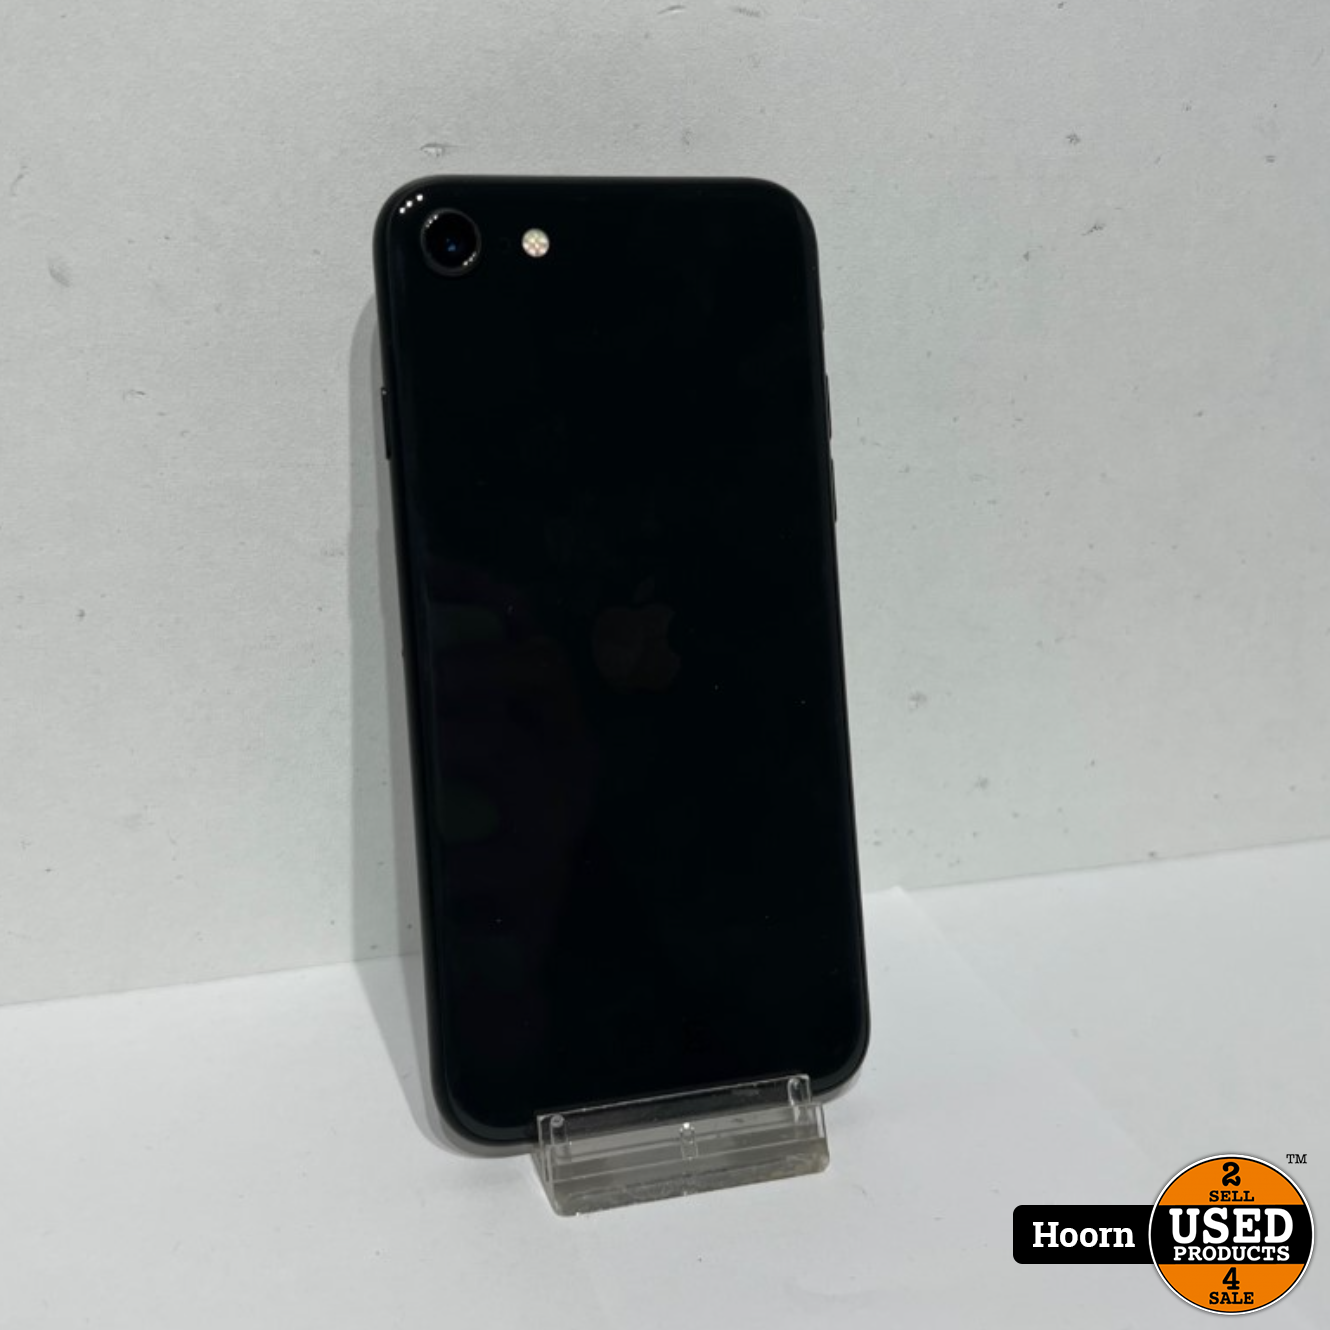 Nathaniel Ward Trein Keuze Apple iPhone iPhone SE 2020 64GB Zwart Los Toestel incl. Lader Accu: 84% -  Used Products Hoorn